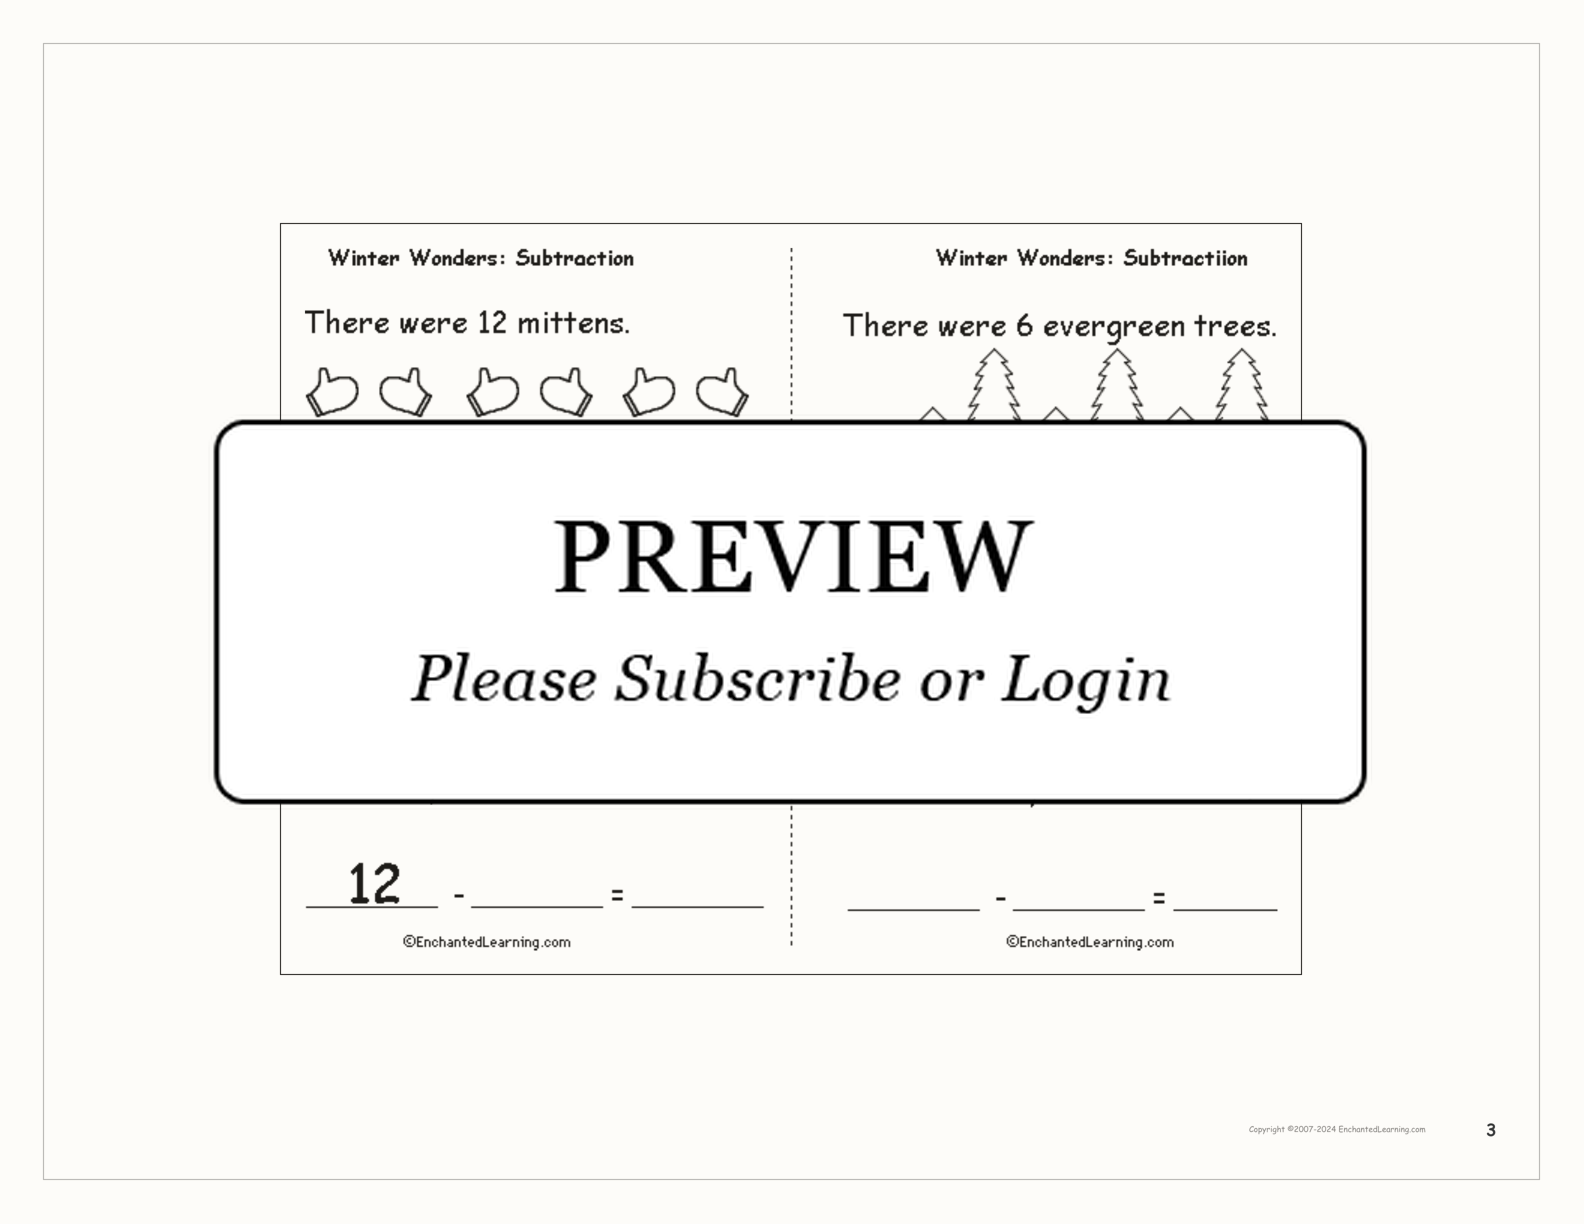 Winter Wonders: Subtraction Book interactive worksheet page 3